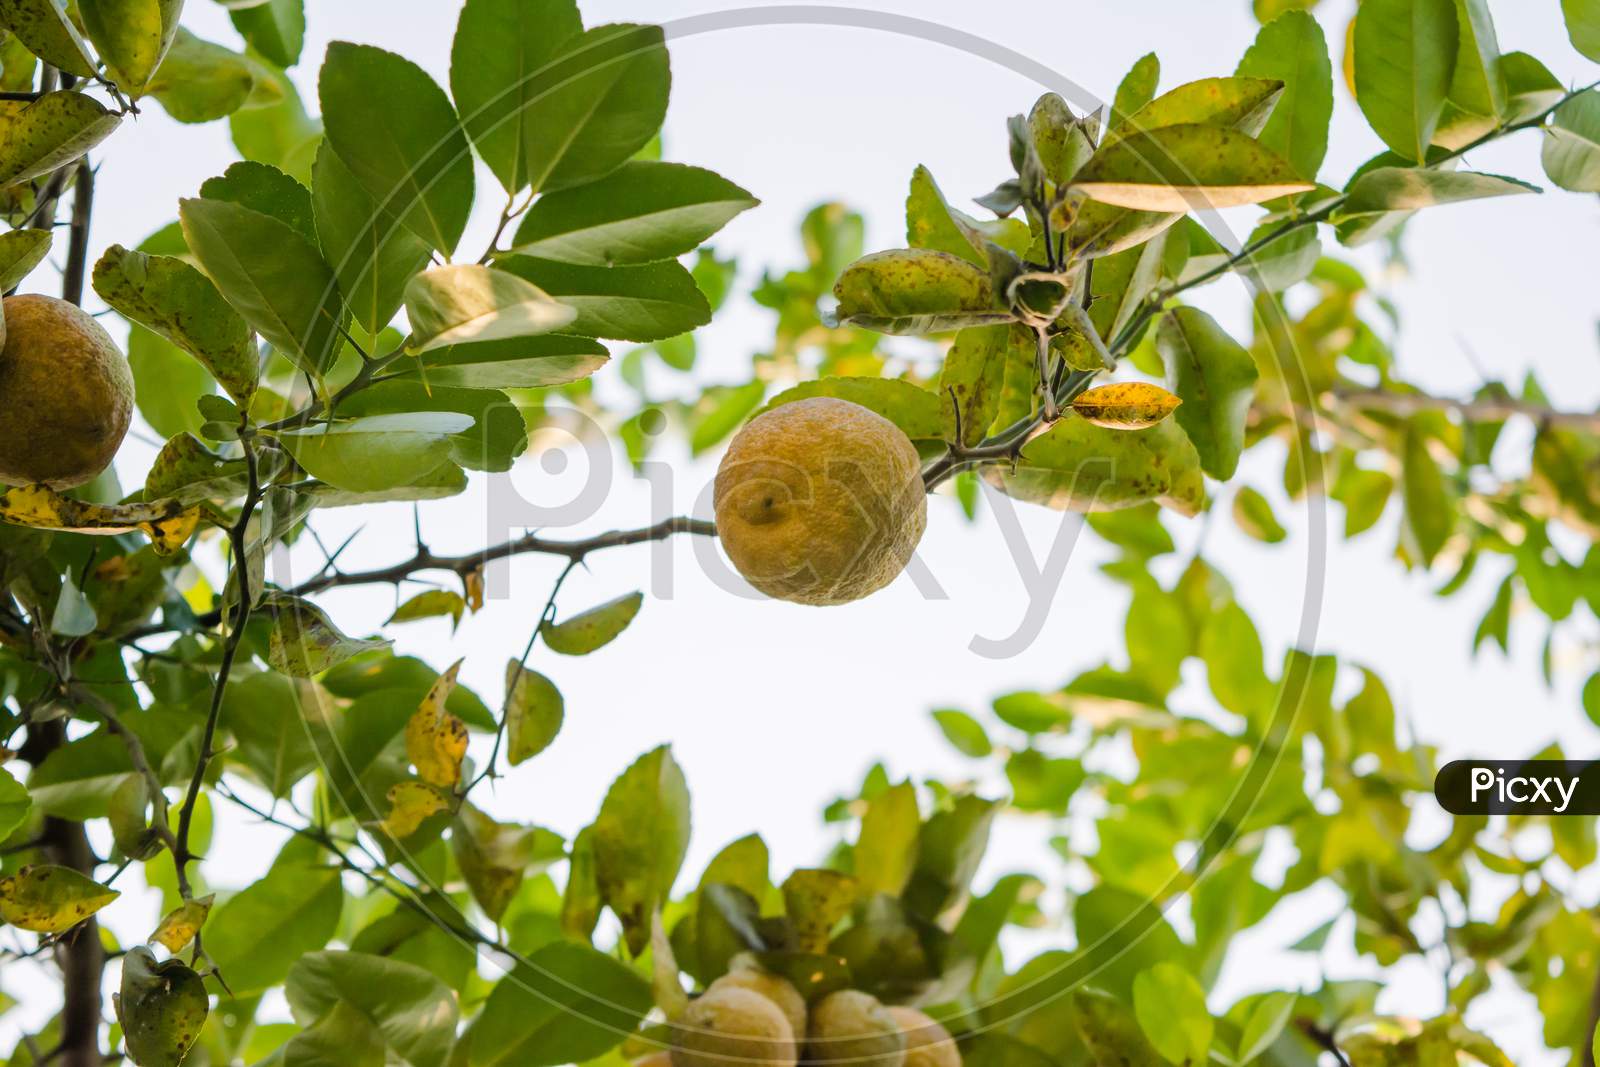 Bunches of fresh yellow ripe lemons hanging on a lemon tree in Assam